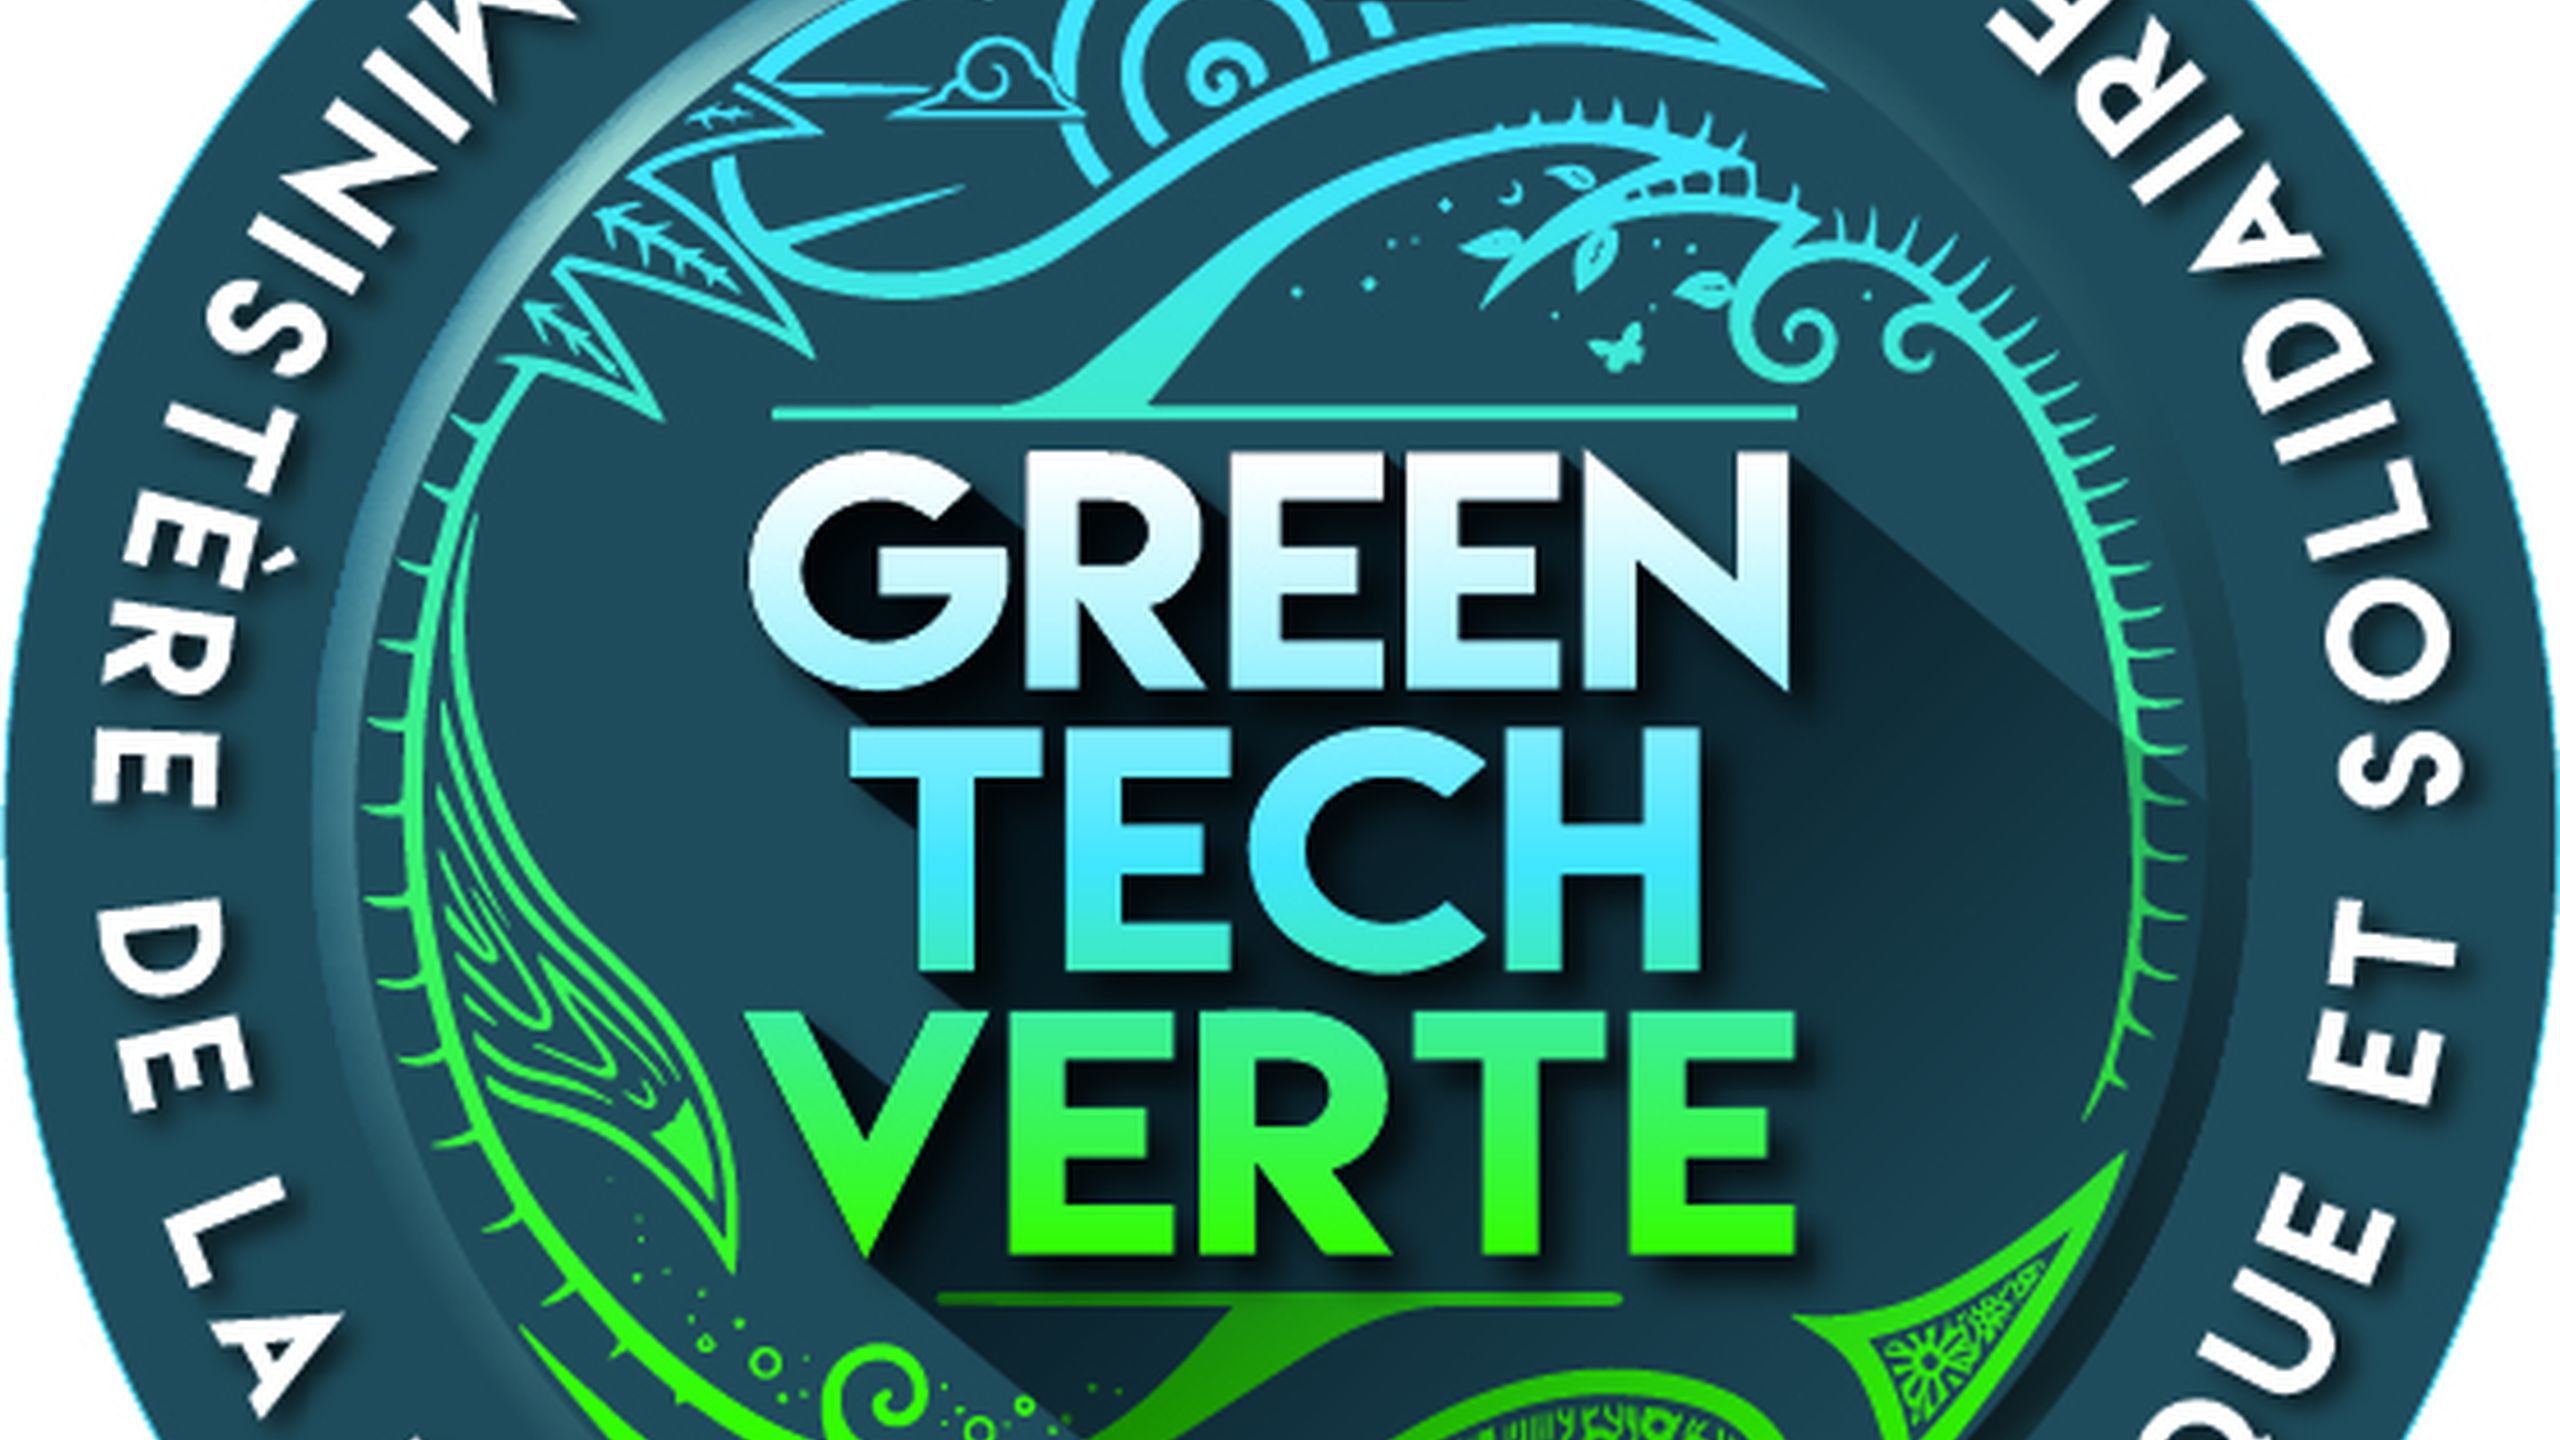 Windfit labeled GreentechVerte solution